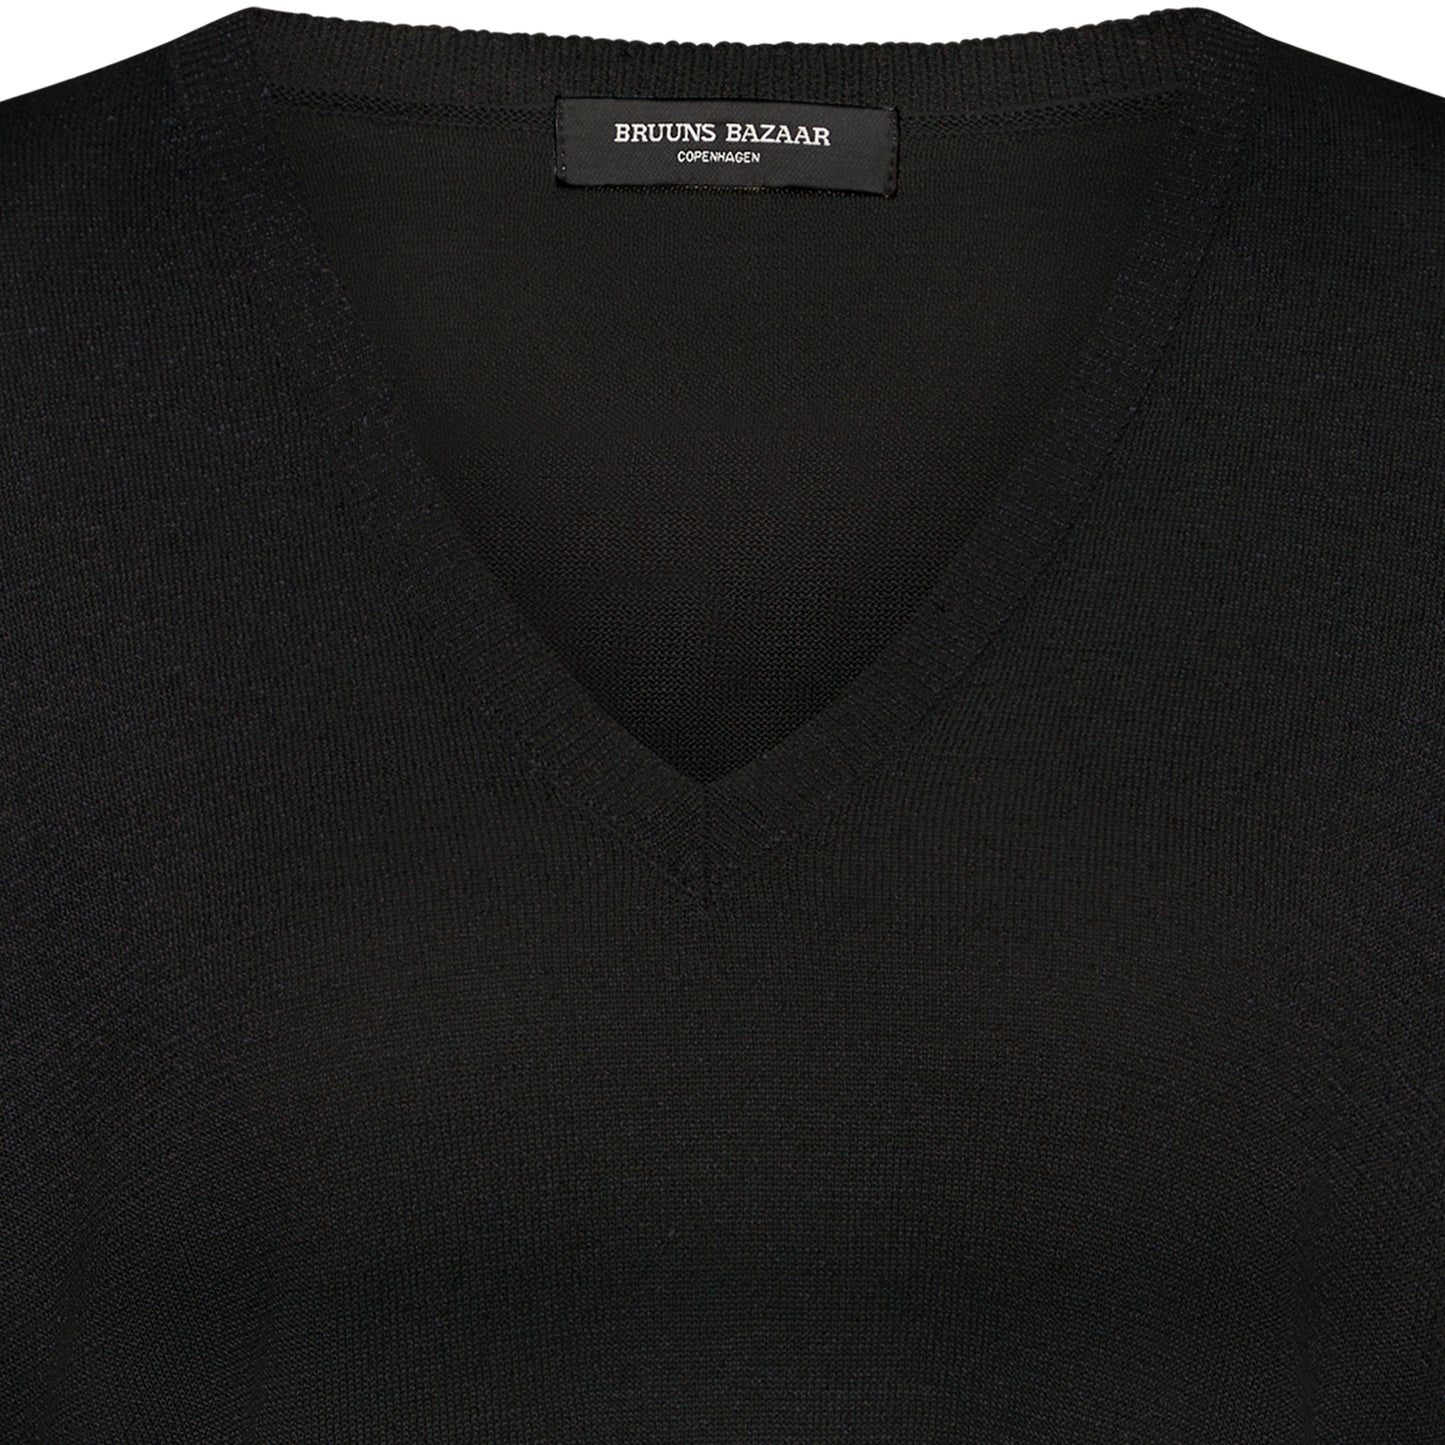 Bruuns Bazaar Women - BluebellBBMarlee knit - Black / Black lurex